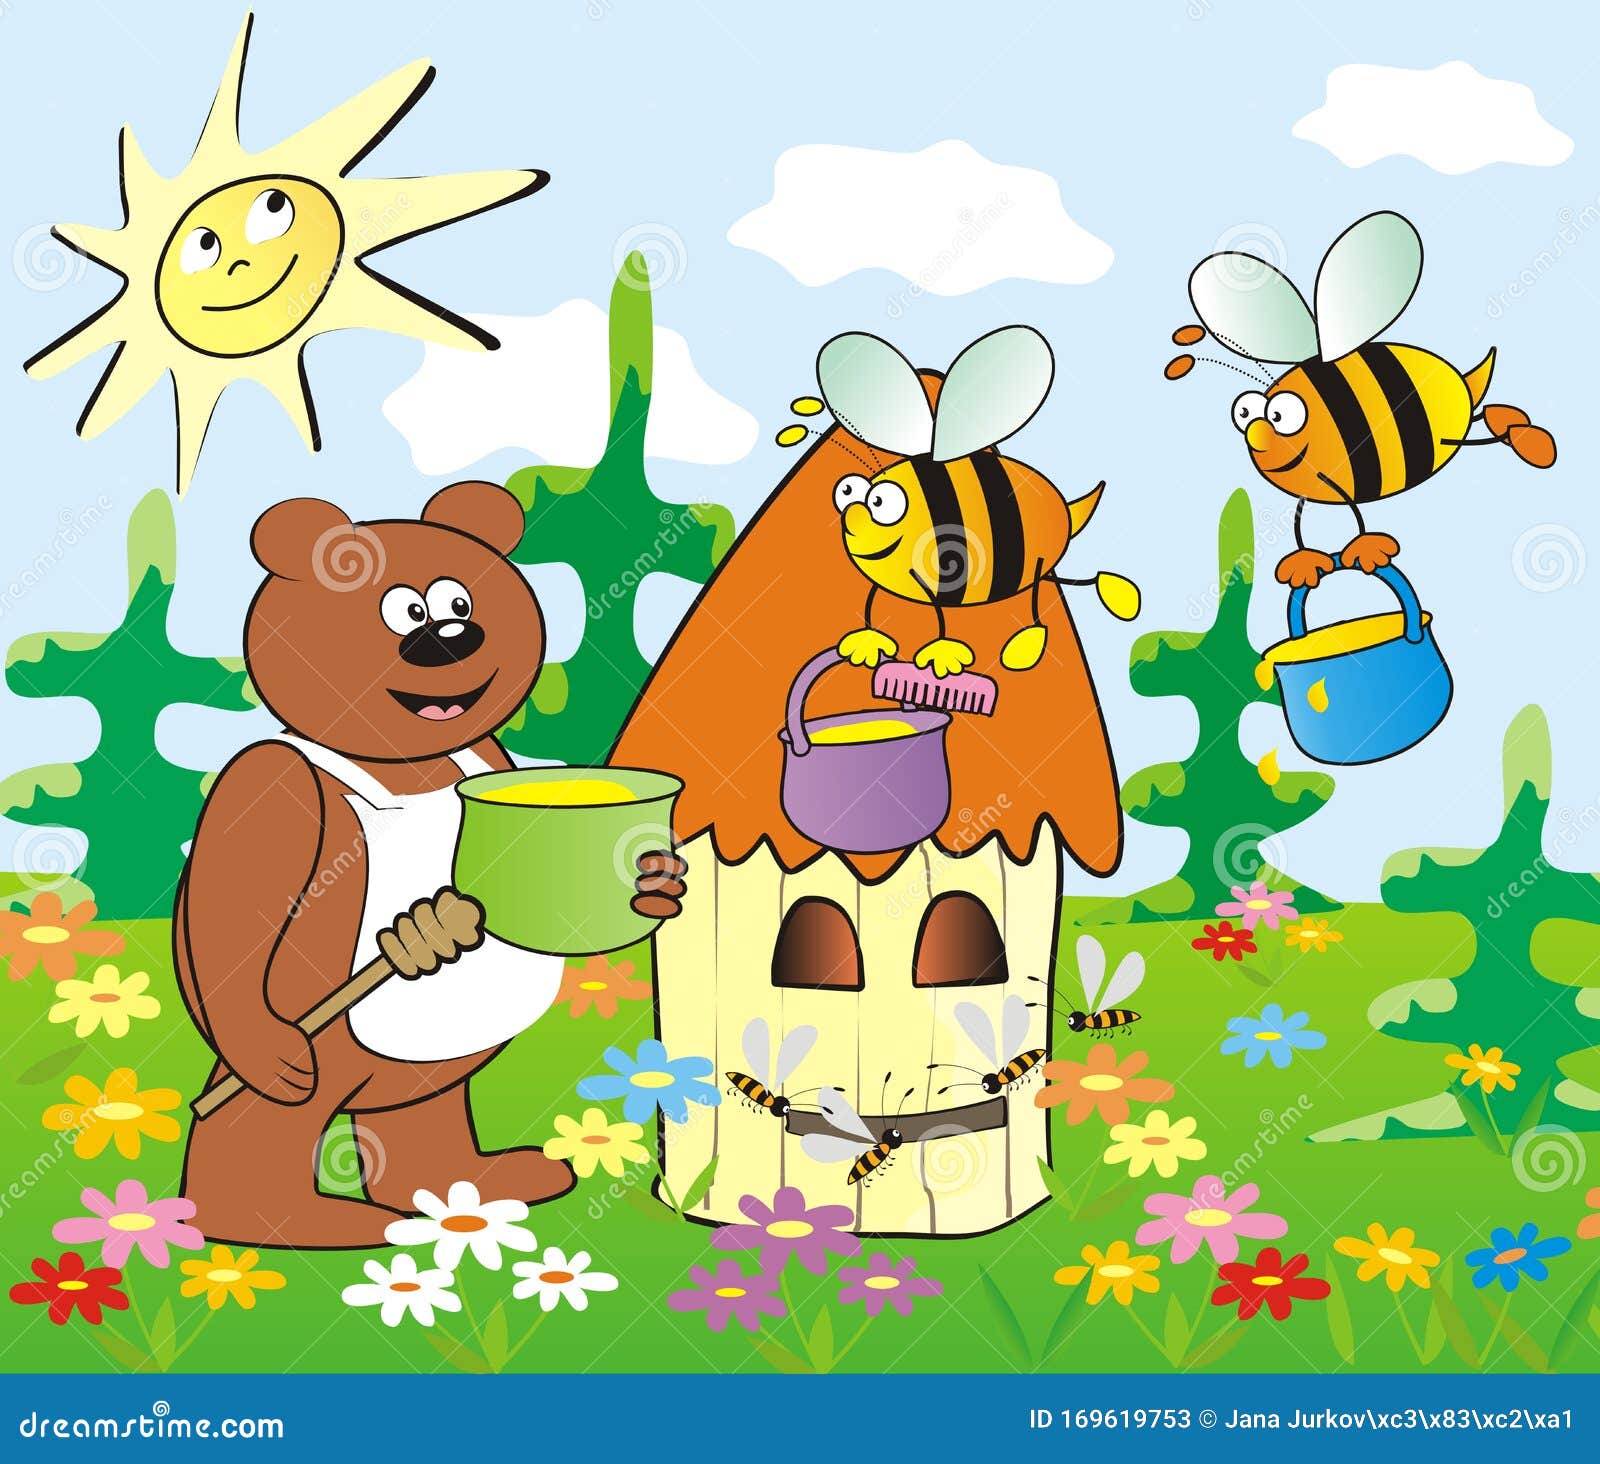 Медведя пчела мед. Пасека мультяшная. Vtldtlm b gxtkrb. Медведь на пасеке. Медвежонок и улей.